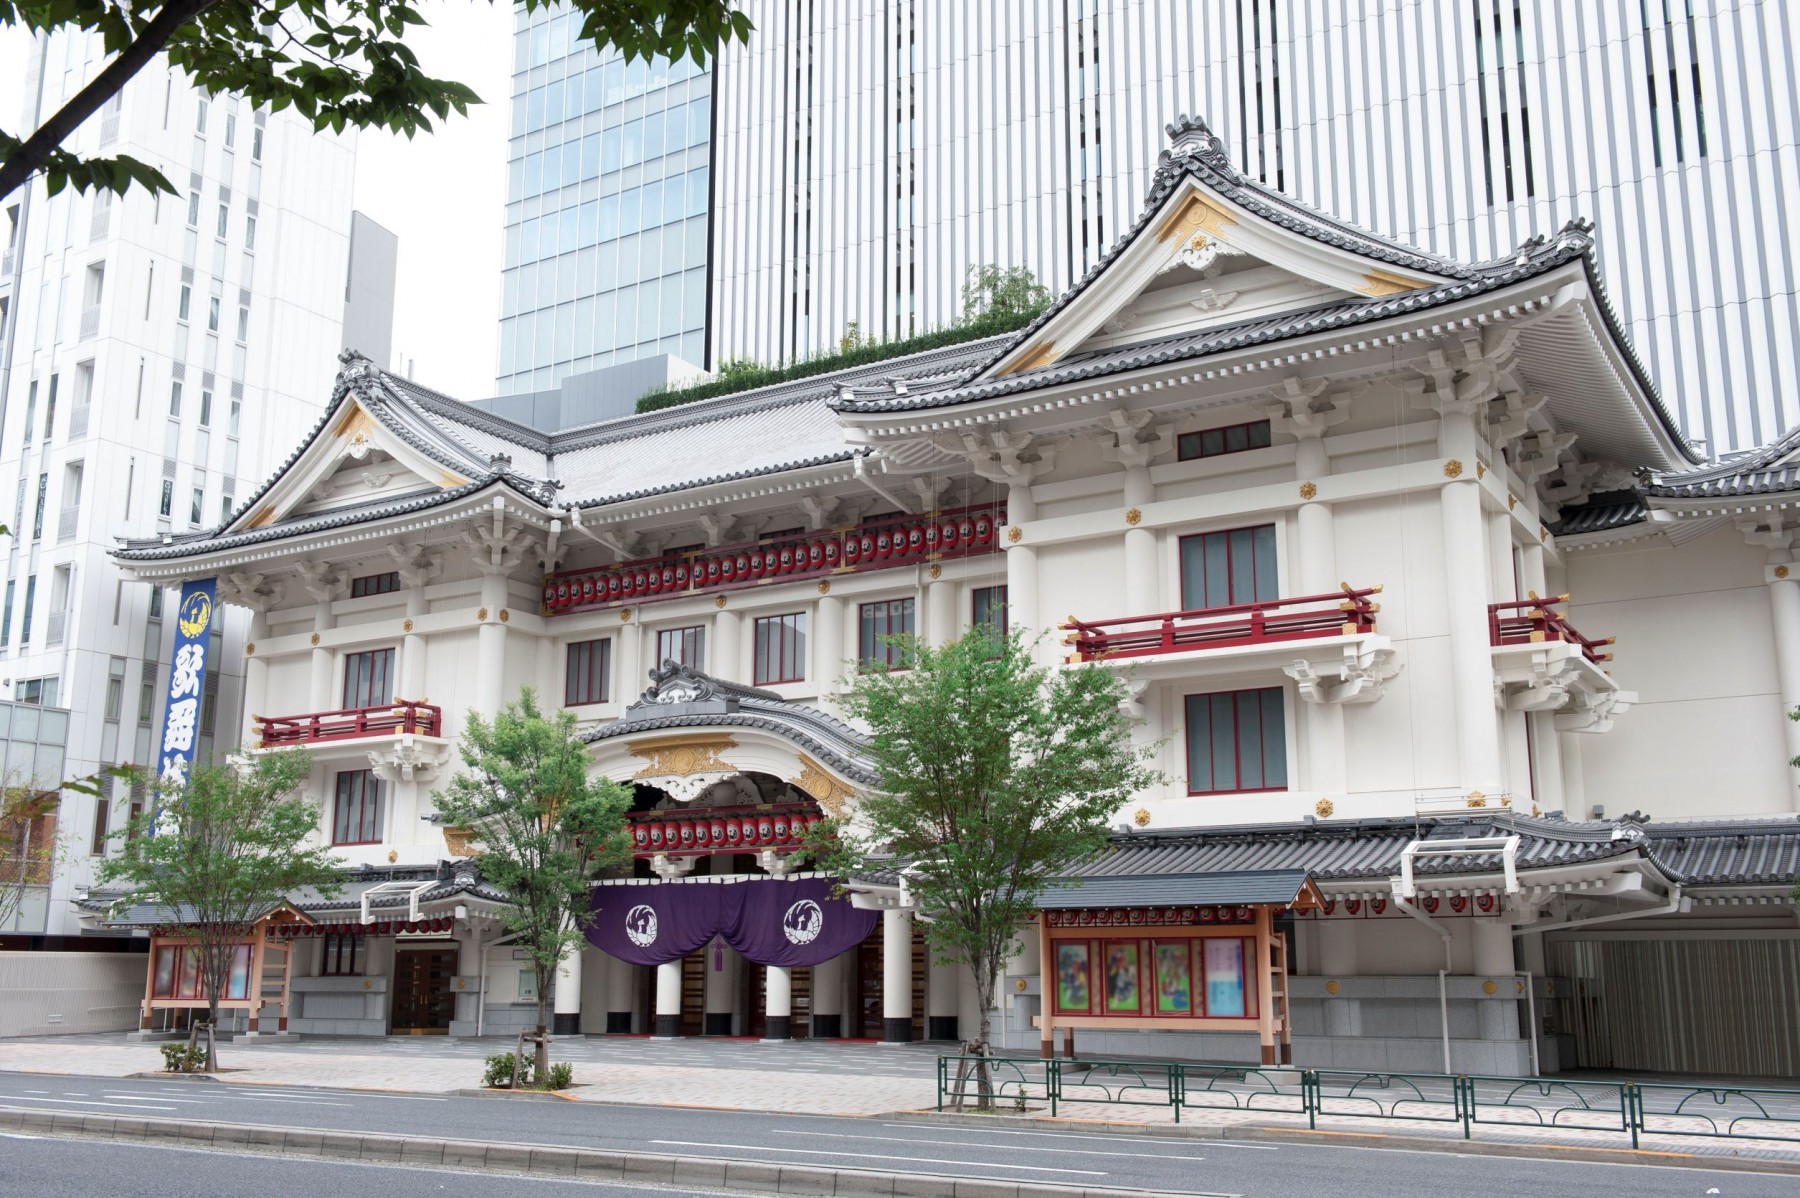 Around the Hotel Kabuki-za